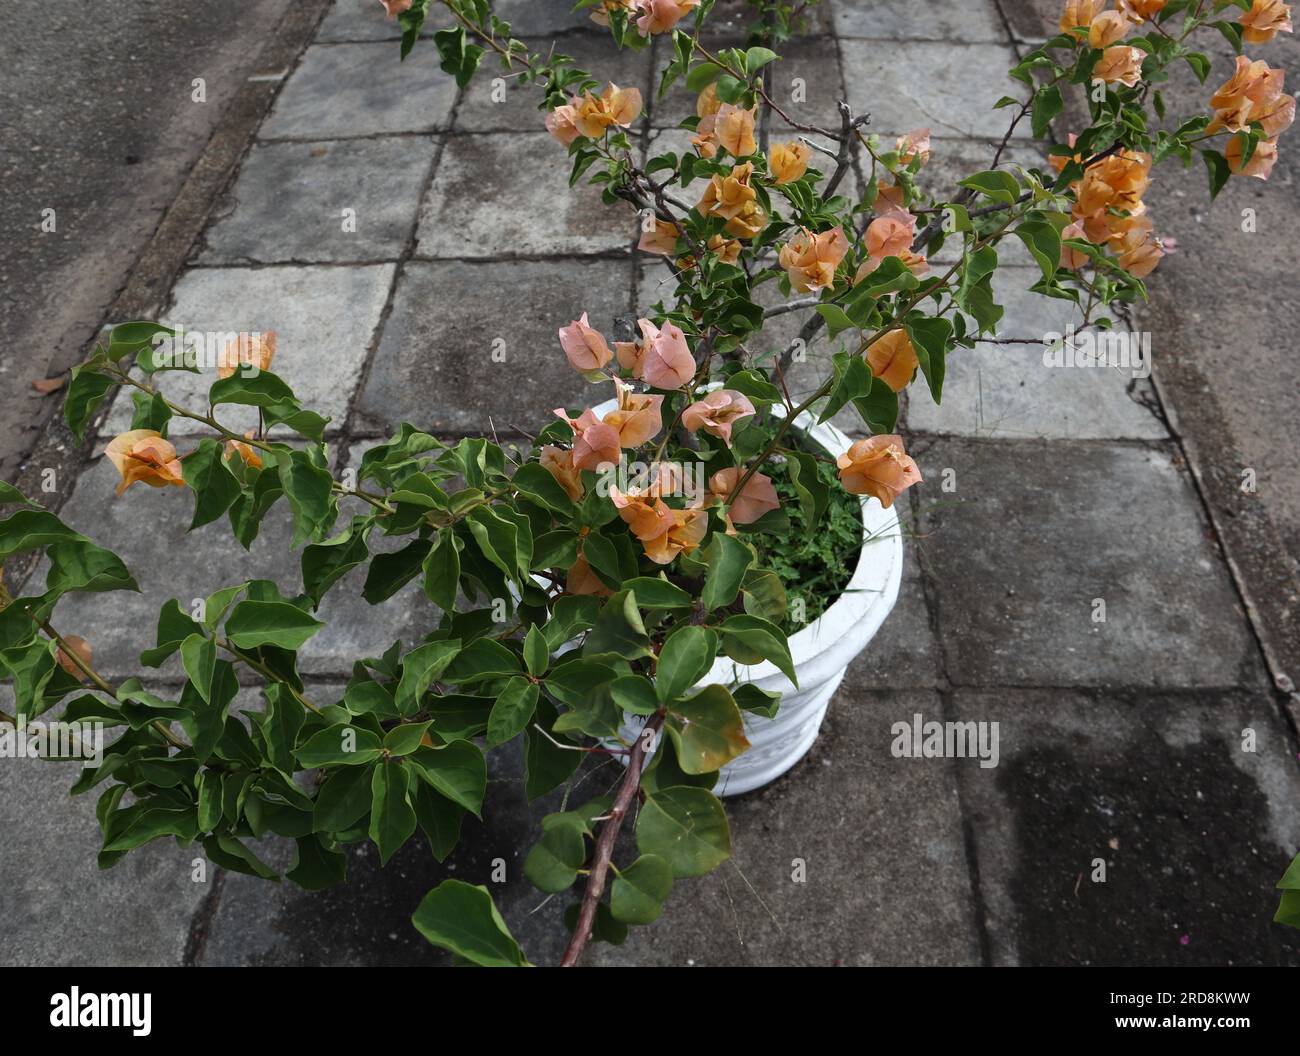 An orange color flower bearing Bougainvillea flower plant growing in a cement pot on a roadside Stock Photo